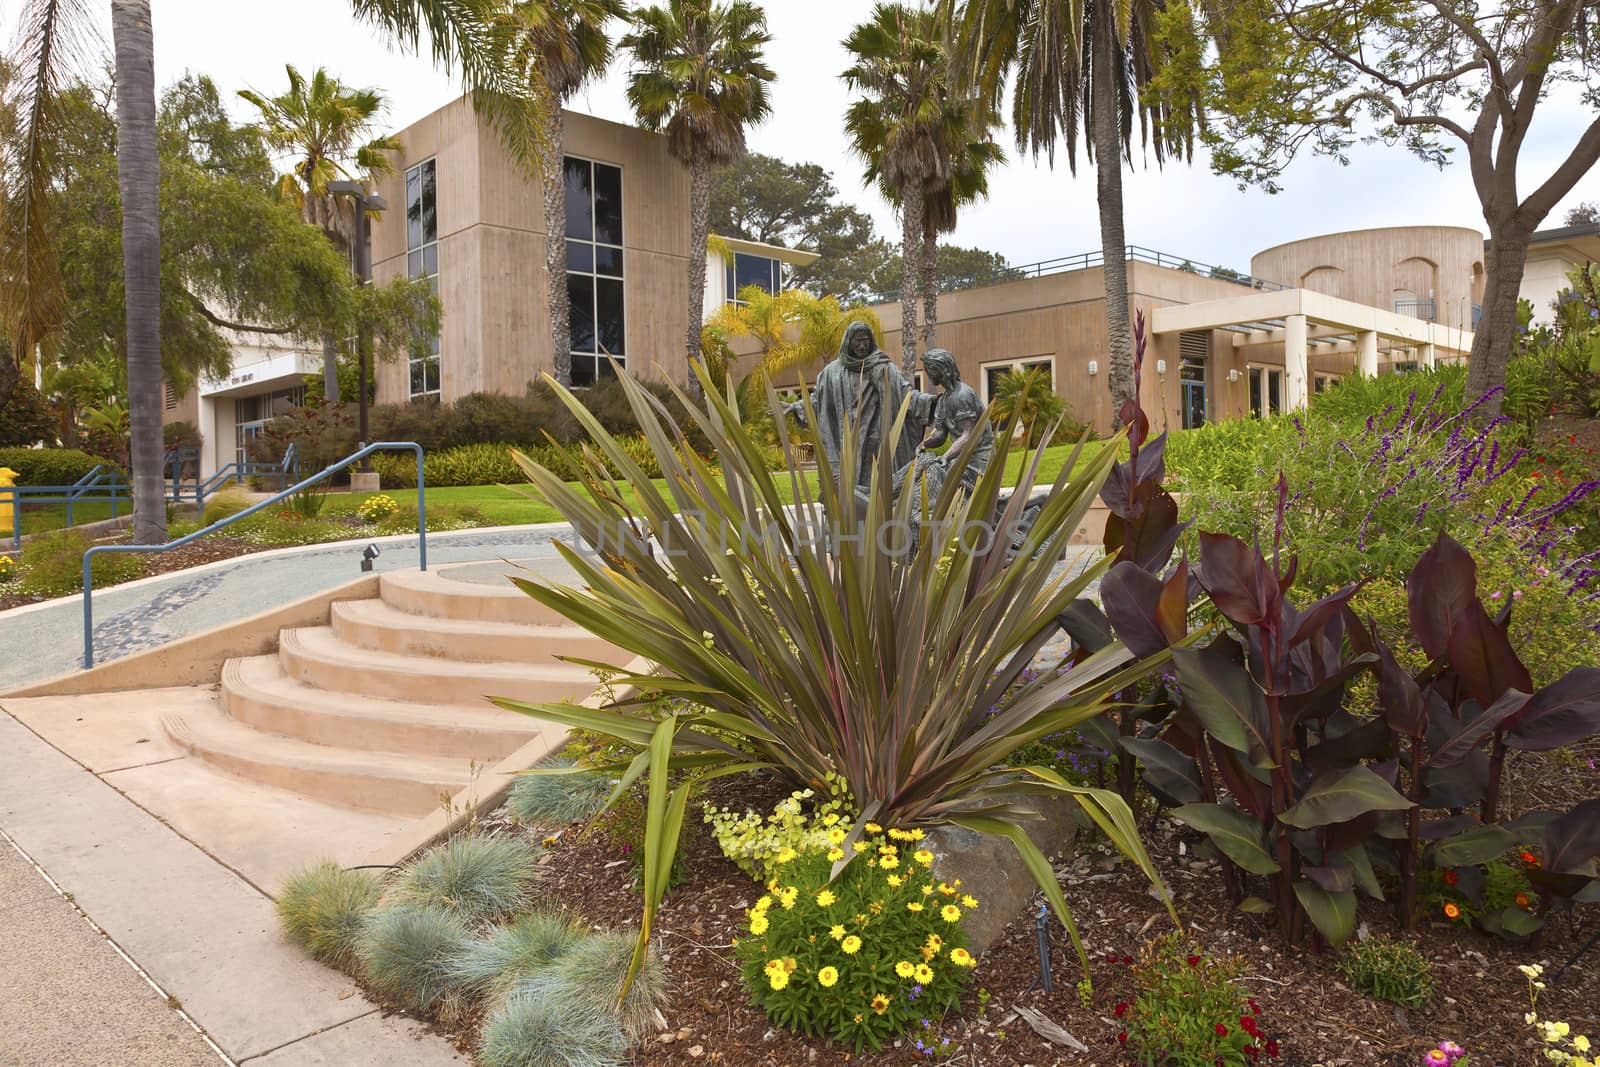 Architecture and park Point Loma Nazarene University california.